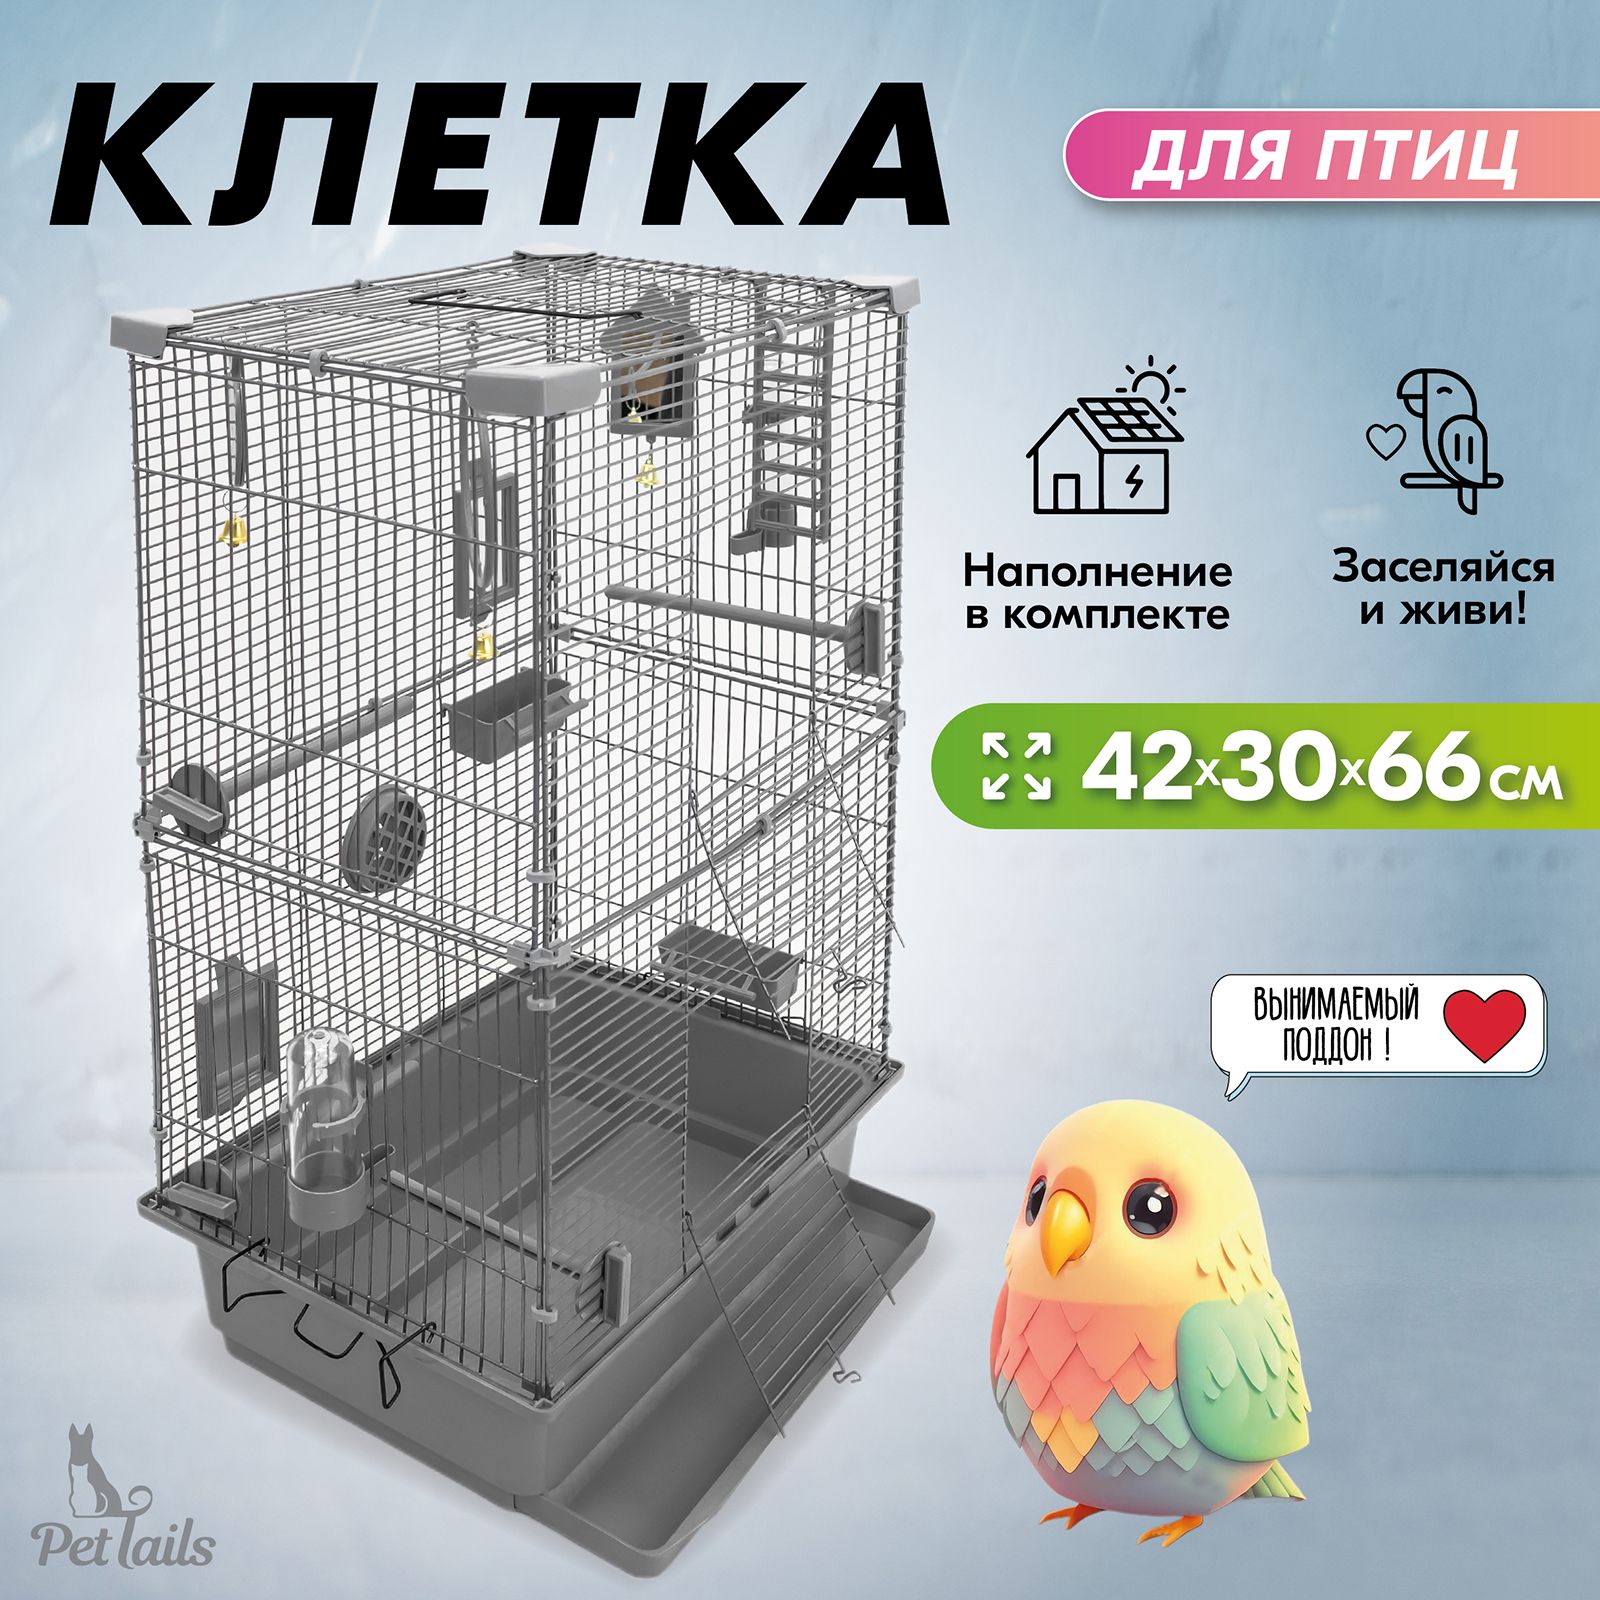 Клетка для птиц PetTails разборная, серая, металл, шаг прута до 11 мм, 42x30x66 см